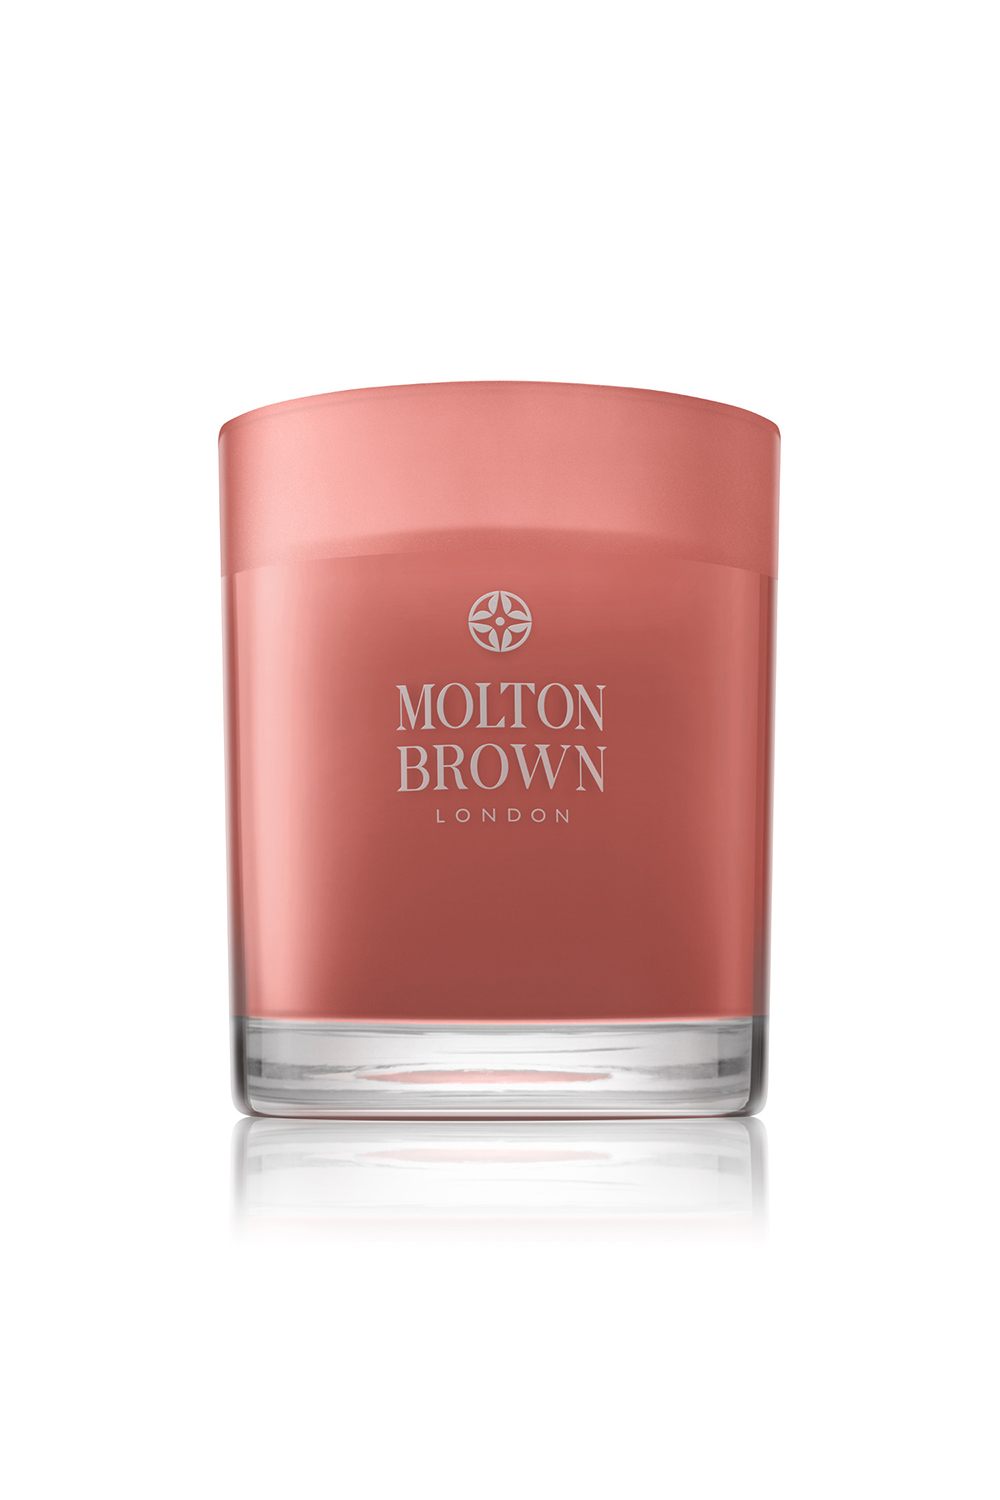 MOLTON BROWN - Κερί Gingerlily Single Wick- 180g Γυναικεία/Αξεσουάρ/Σπίτι